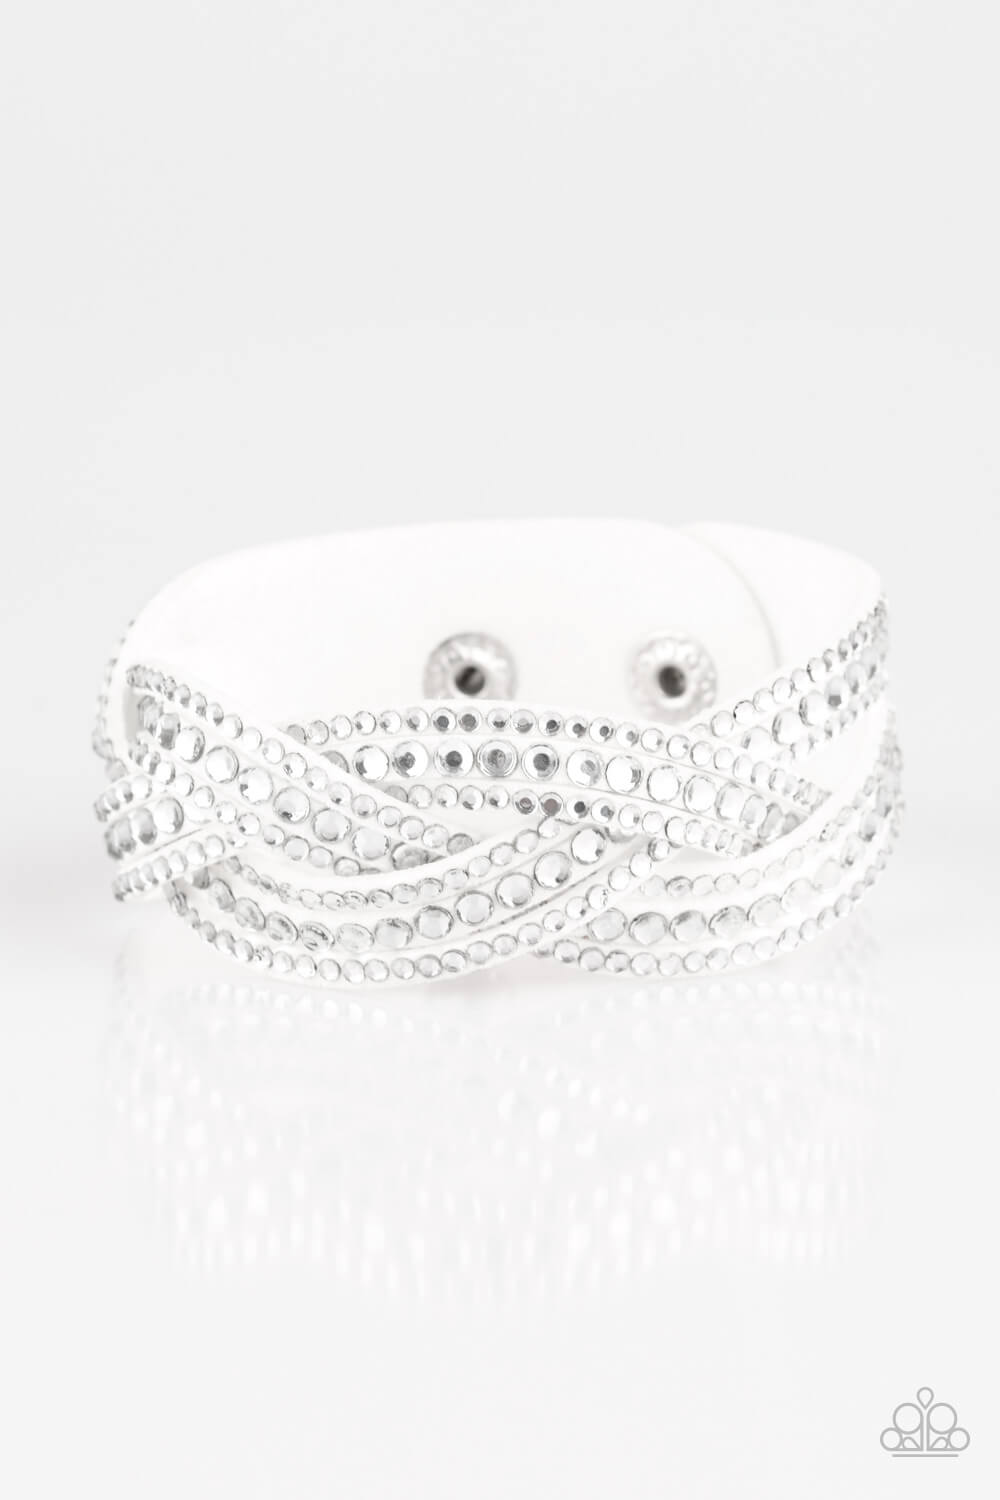 Bring On The Bling - White Braided Snap Bracelet - Princess Glam Shop